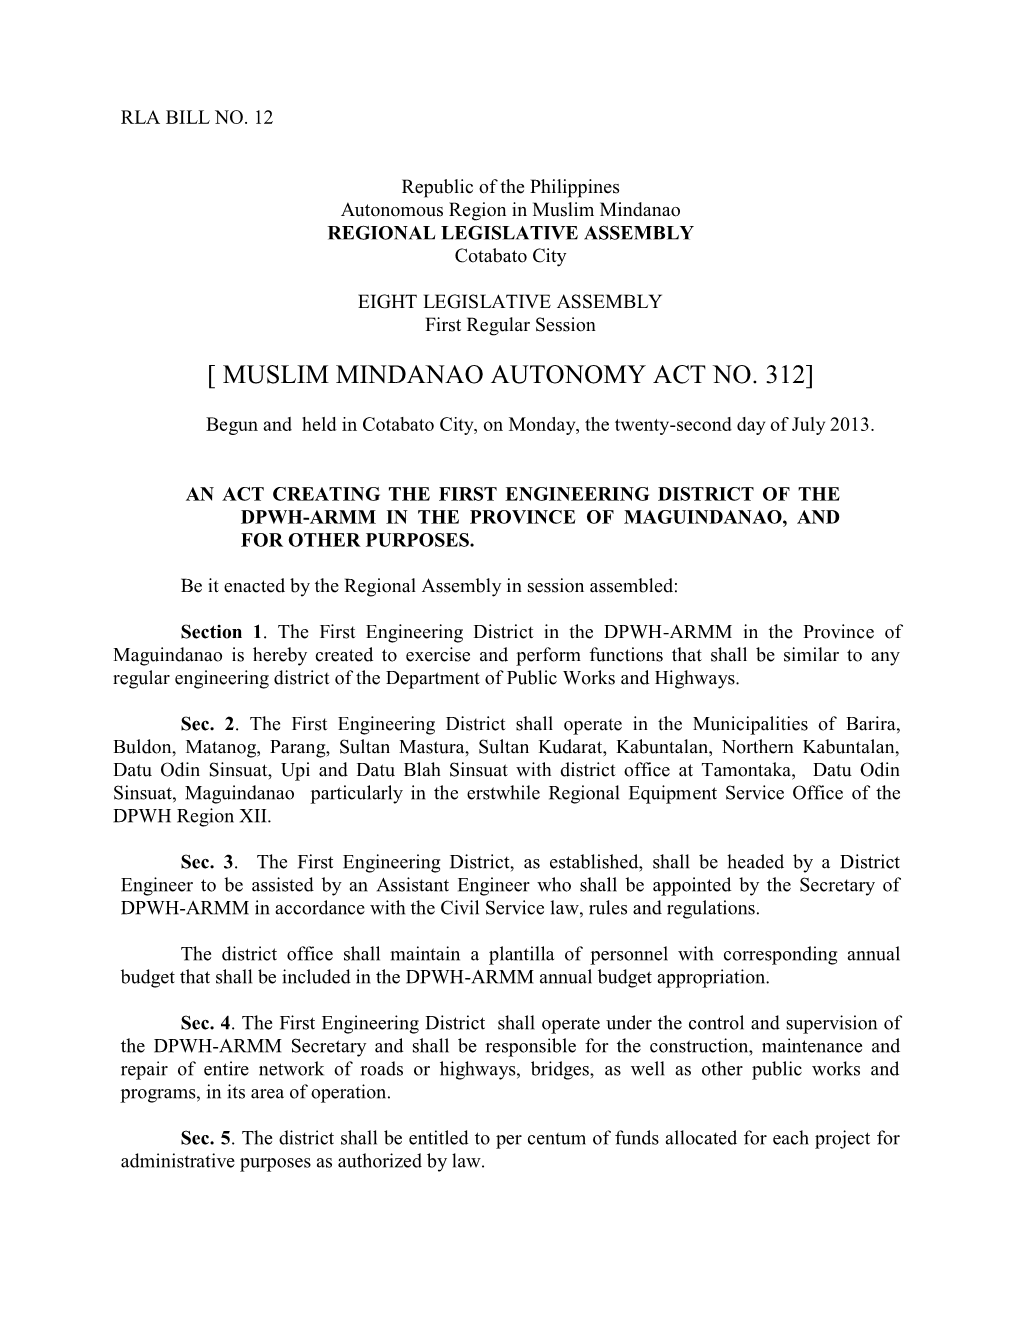 [ Muslim Mindanao Autonomy Act No. 312]